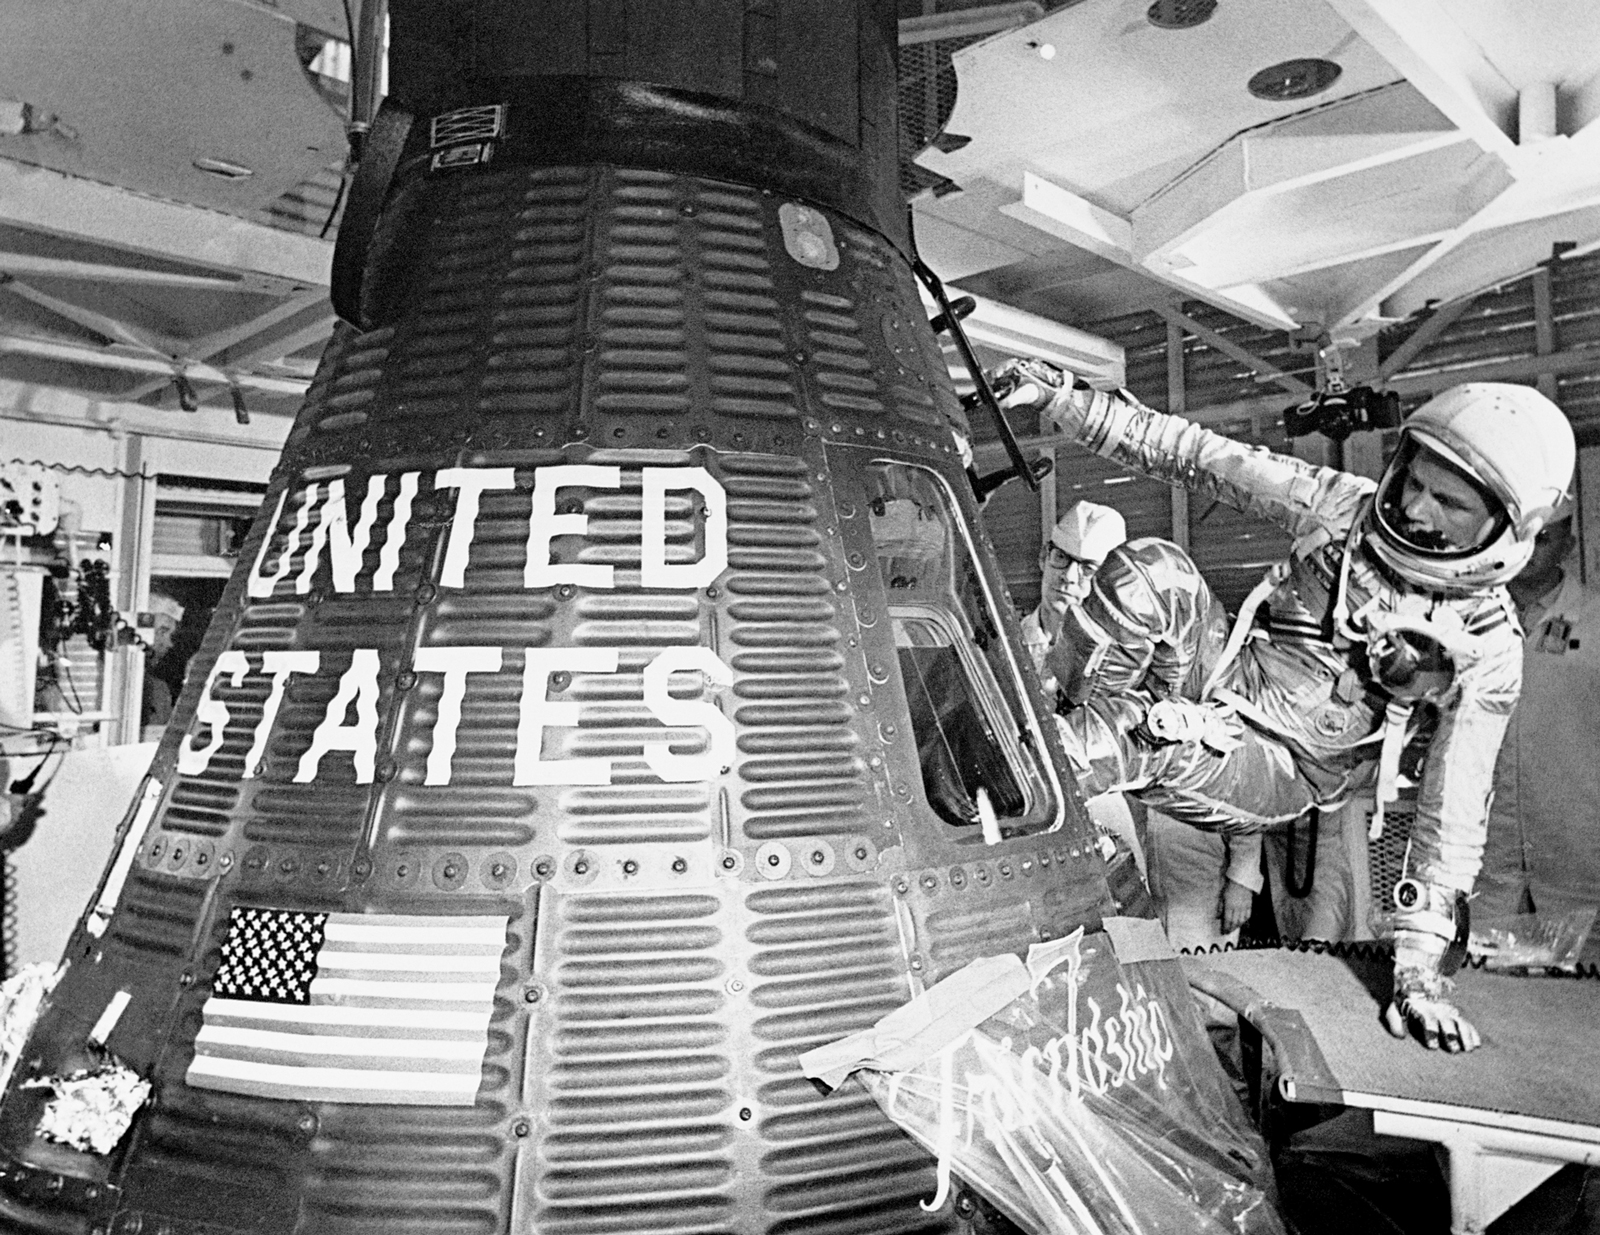 John Glenn becomes the first American to orbit Earth, 1962